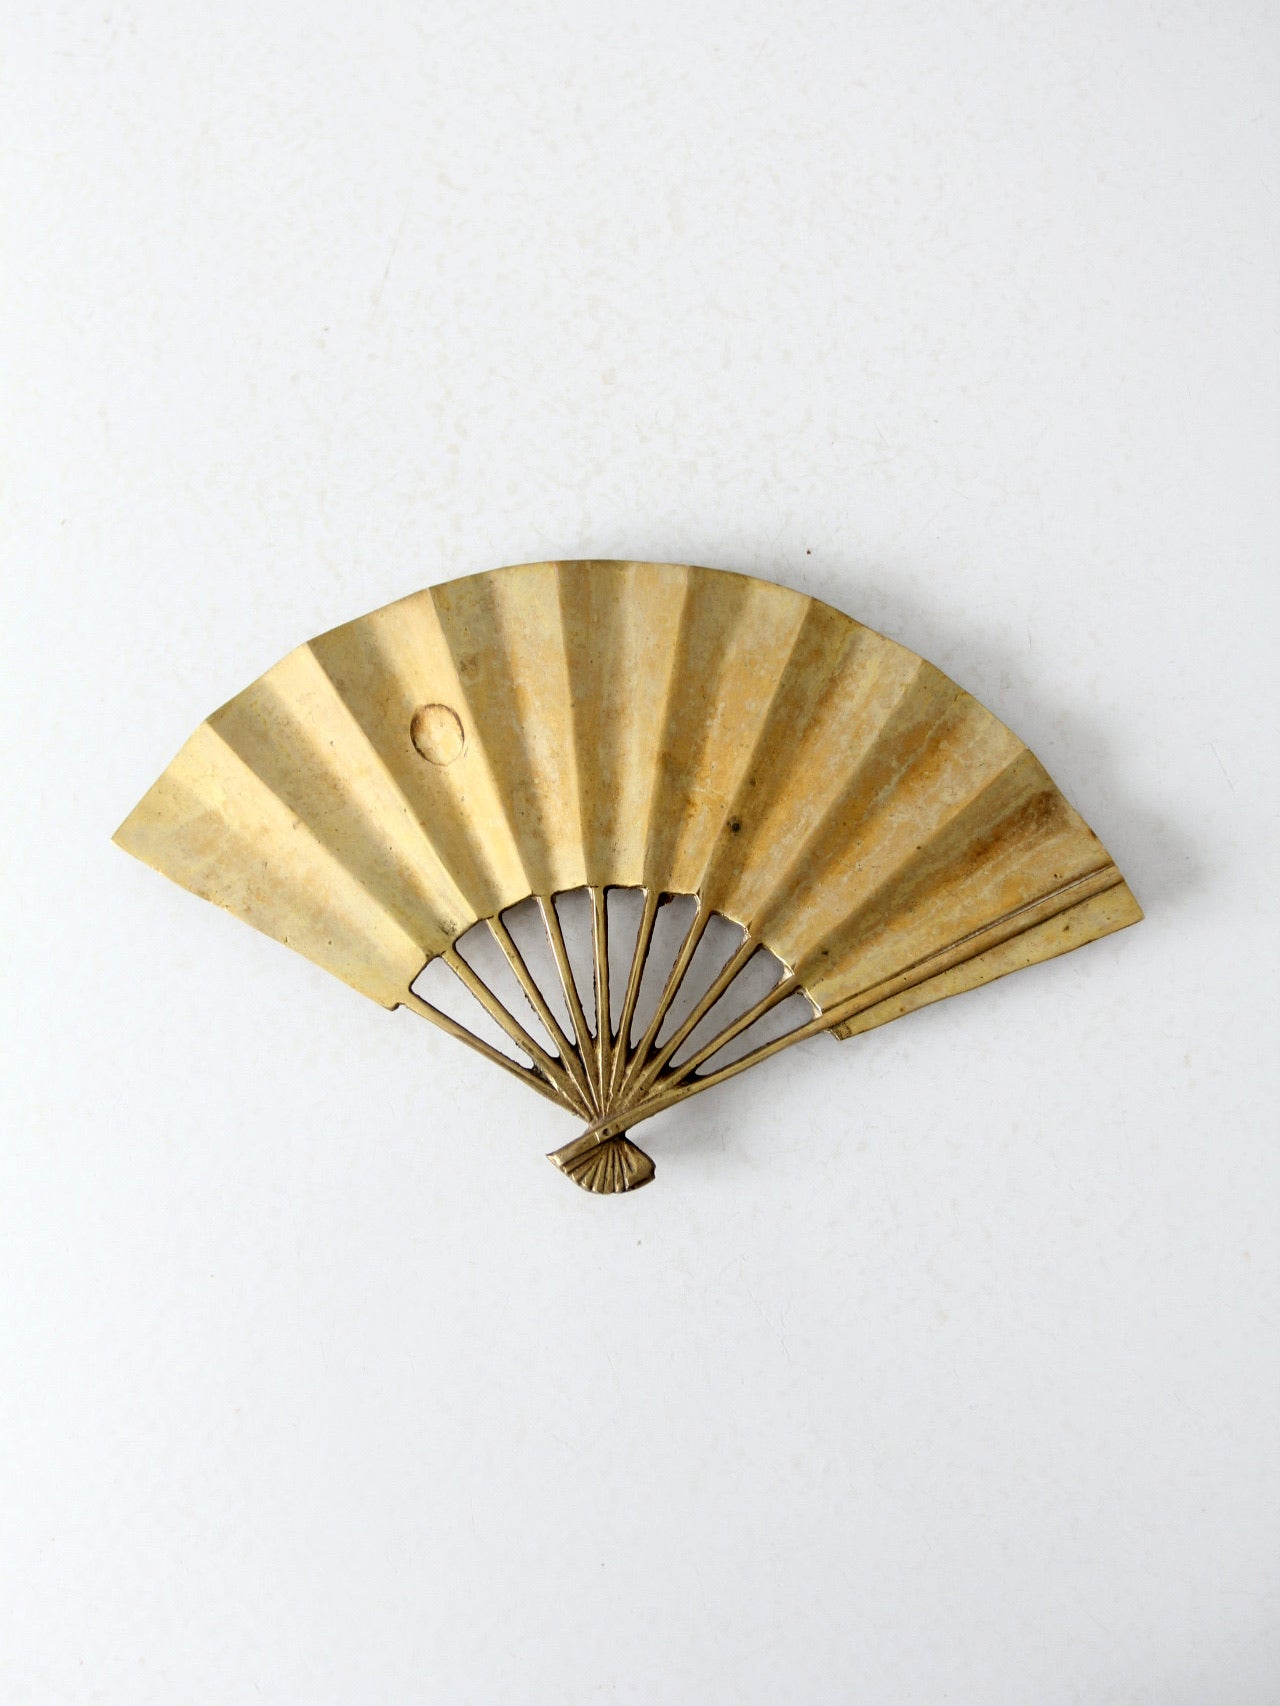 mid century decorative brass fan tray